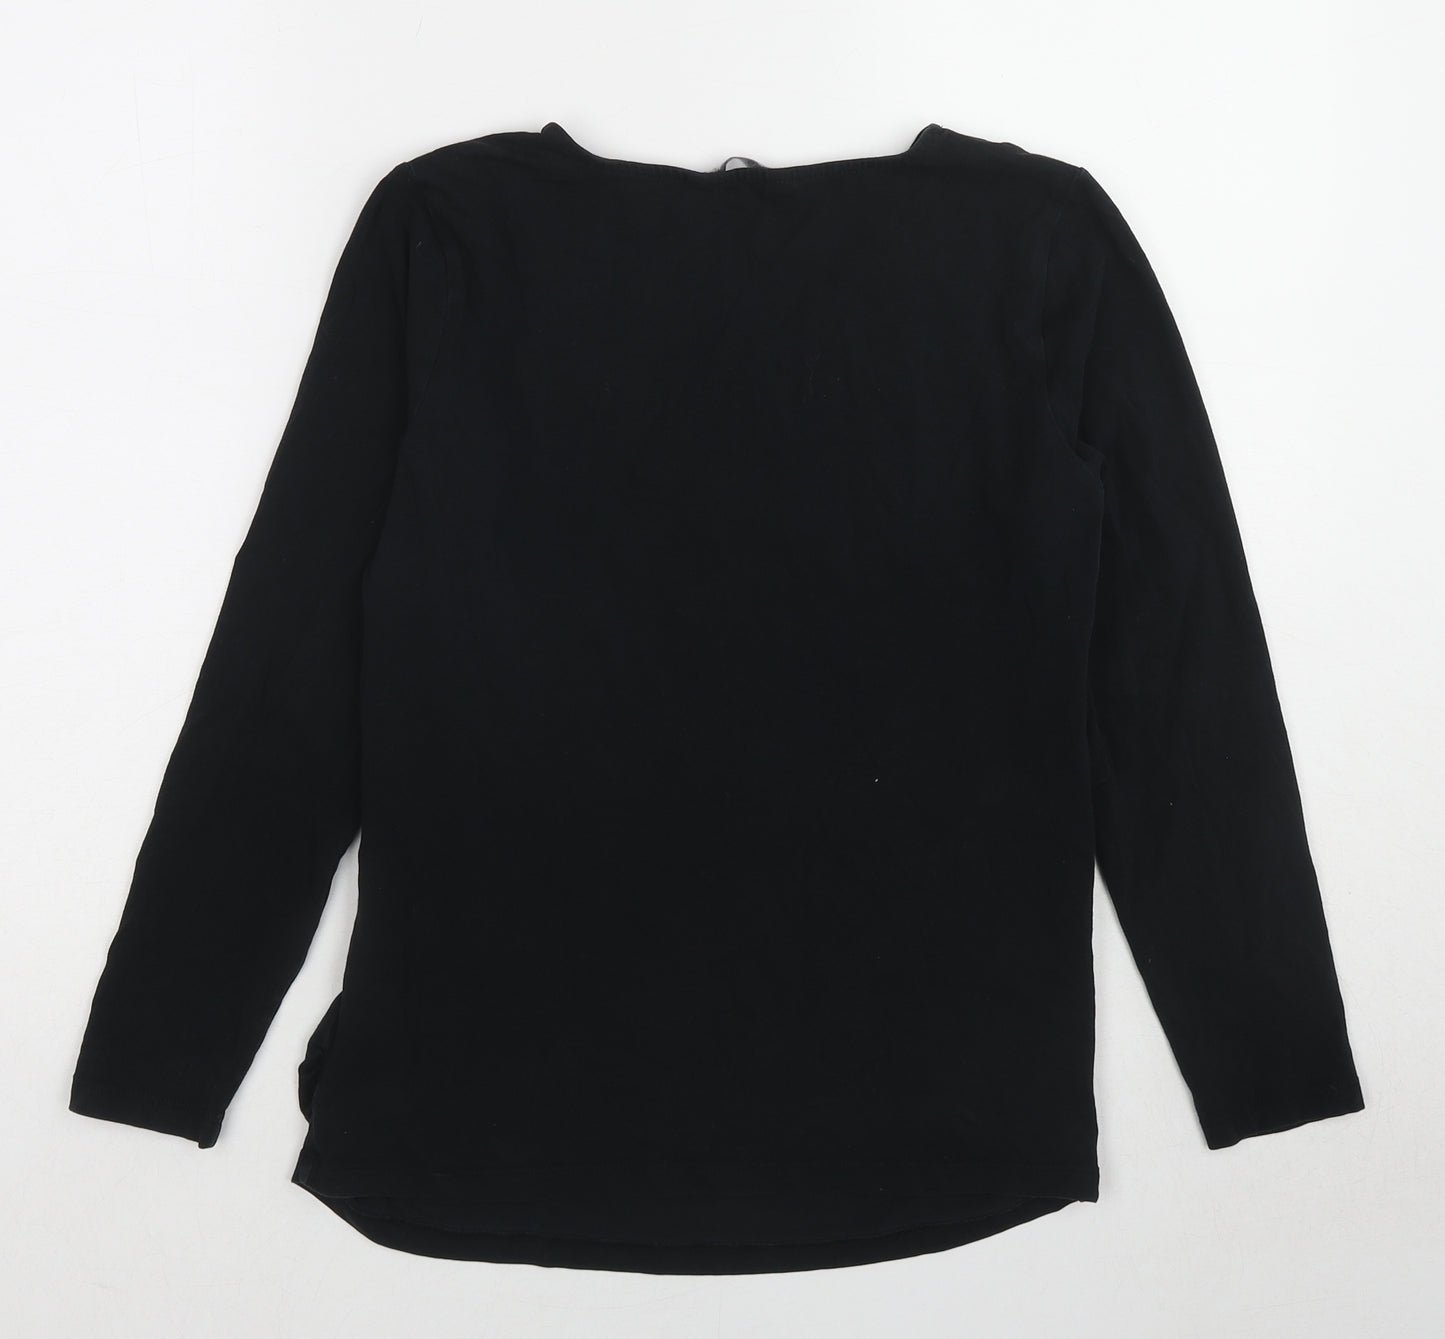 Marks and Spencer Womens Black Cotton Basic Blouse Size M V-Neck